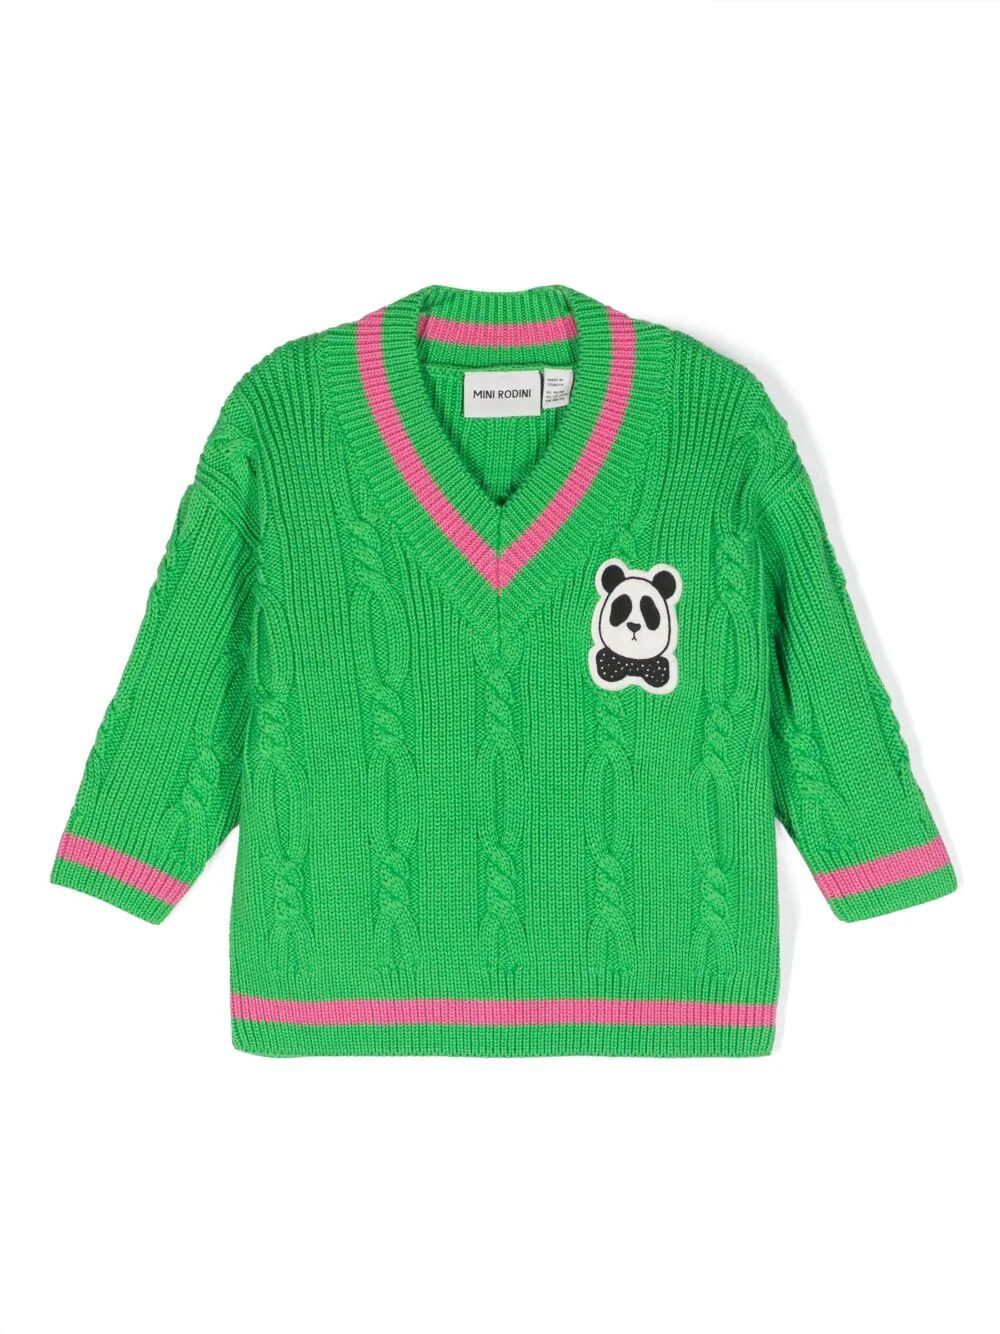 Minirodini Panda Knitted V Neck Sweater In Green